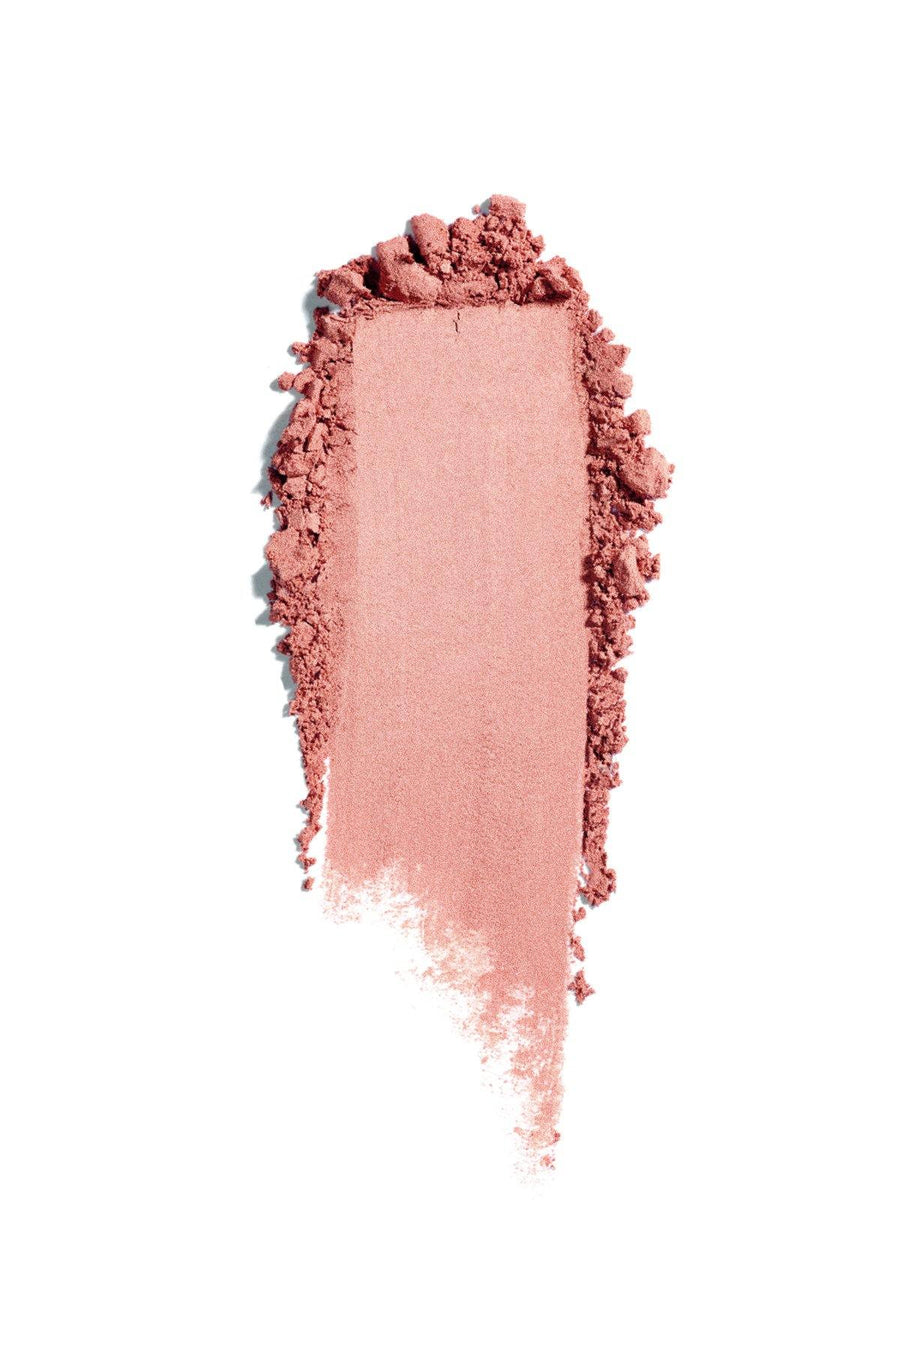 Mineral Blush #2 - Natural Pink - Blend Mineral Cosmetics